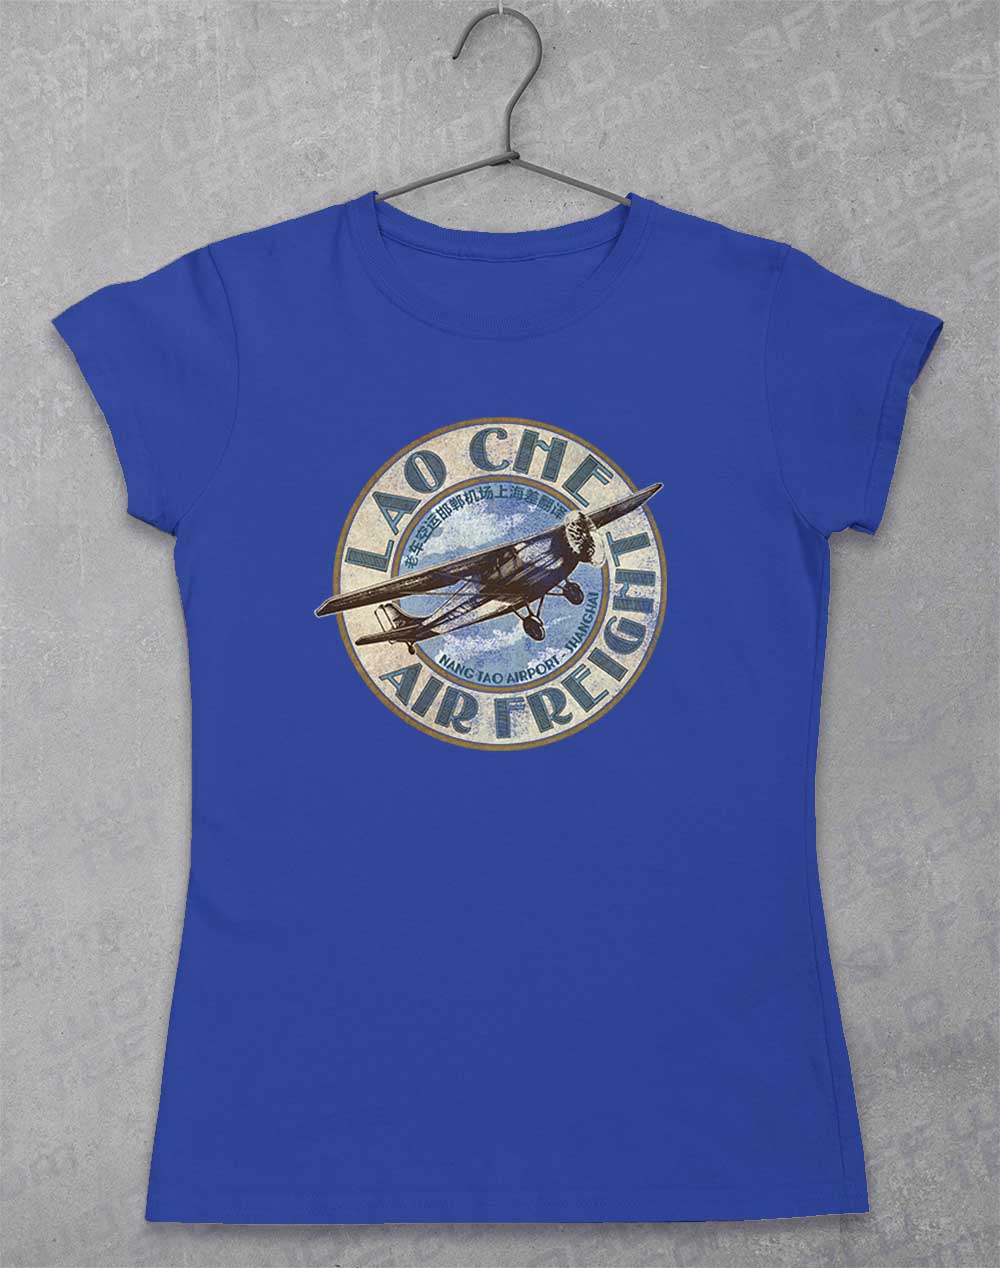 Royal - Lao Che Air Freight Women's T-Shirt